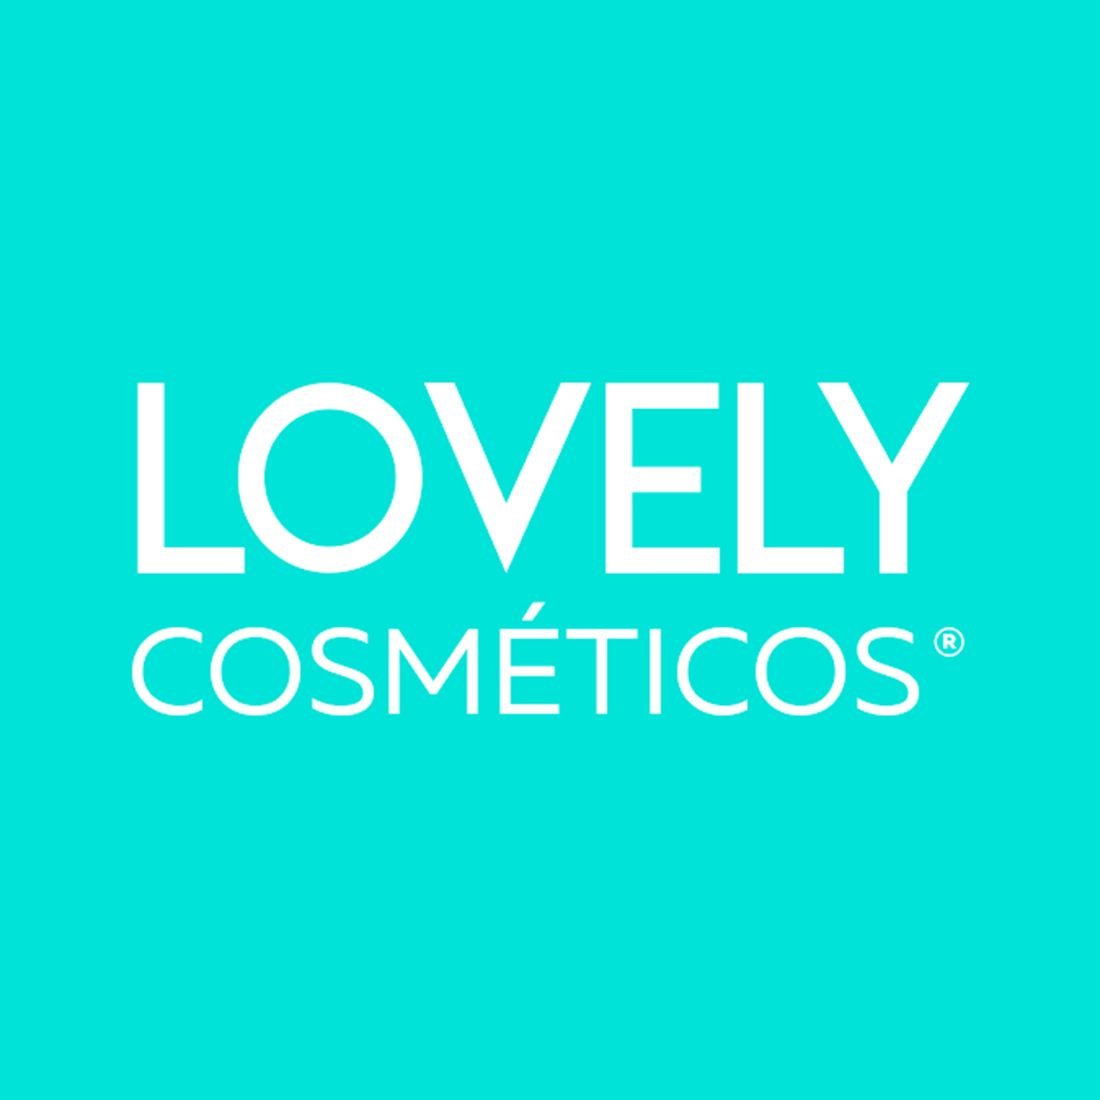 logo-lovely-cosmeticos